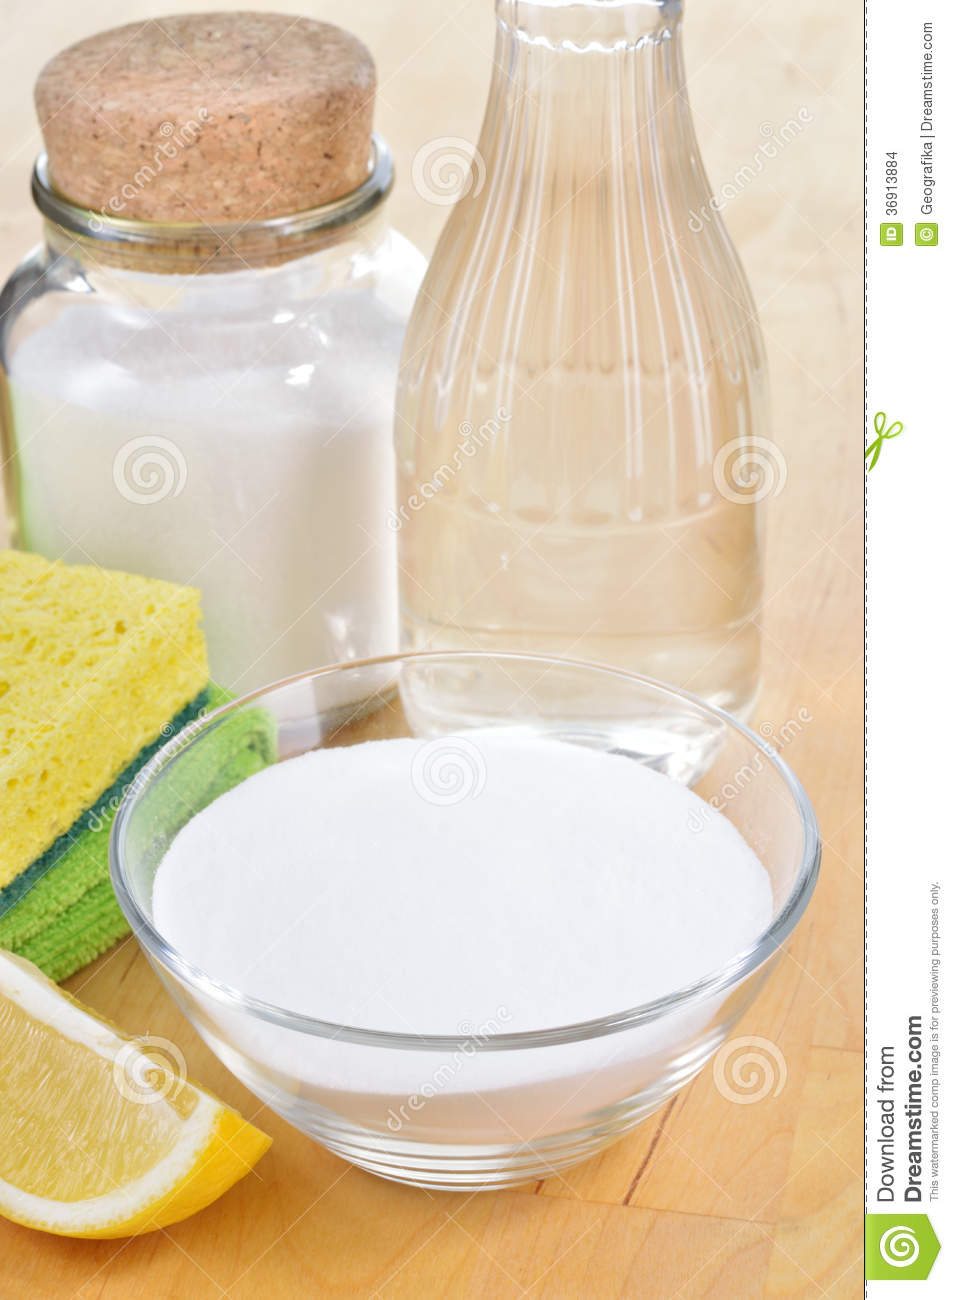 Natural Cleaners  Vinegar Baking Soda Salt And Lemon  Stock Images    